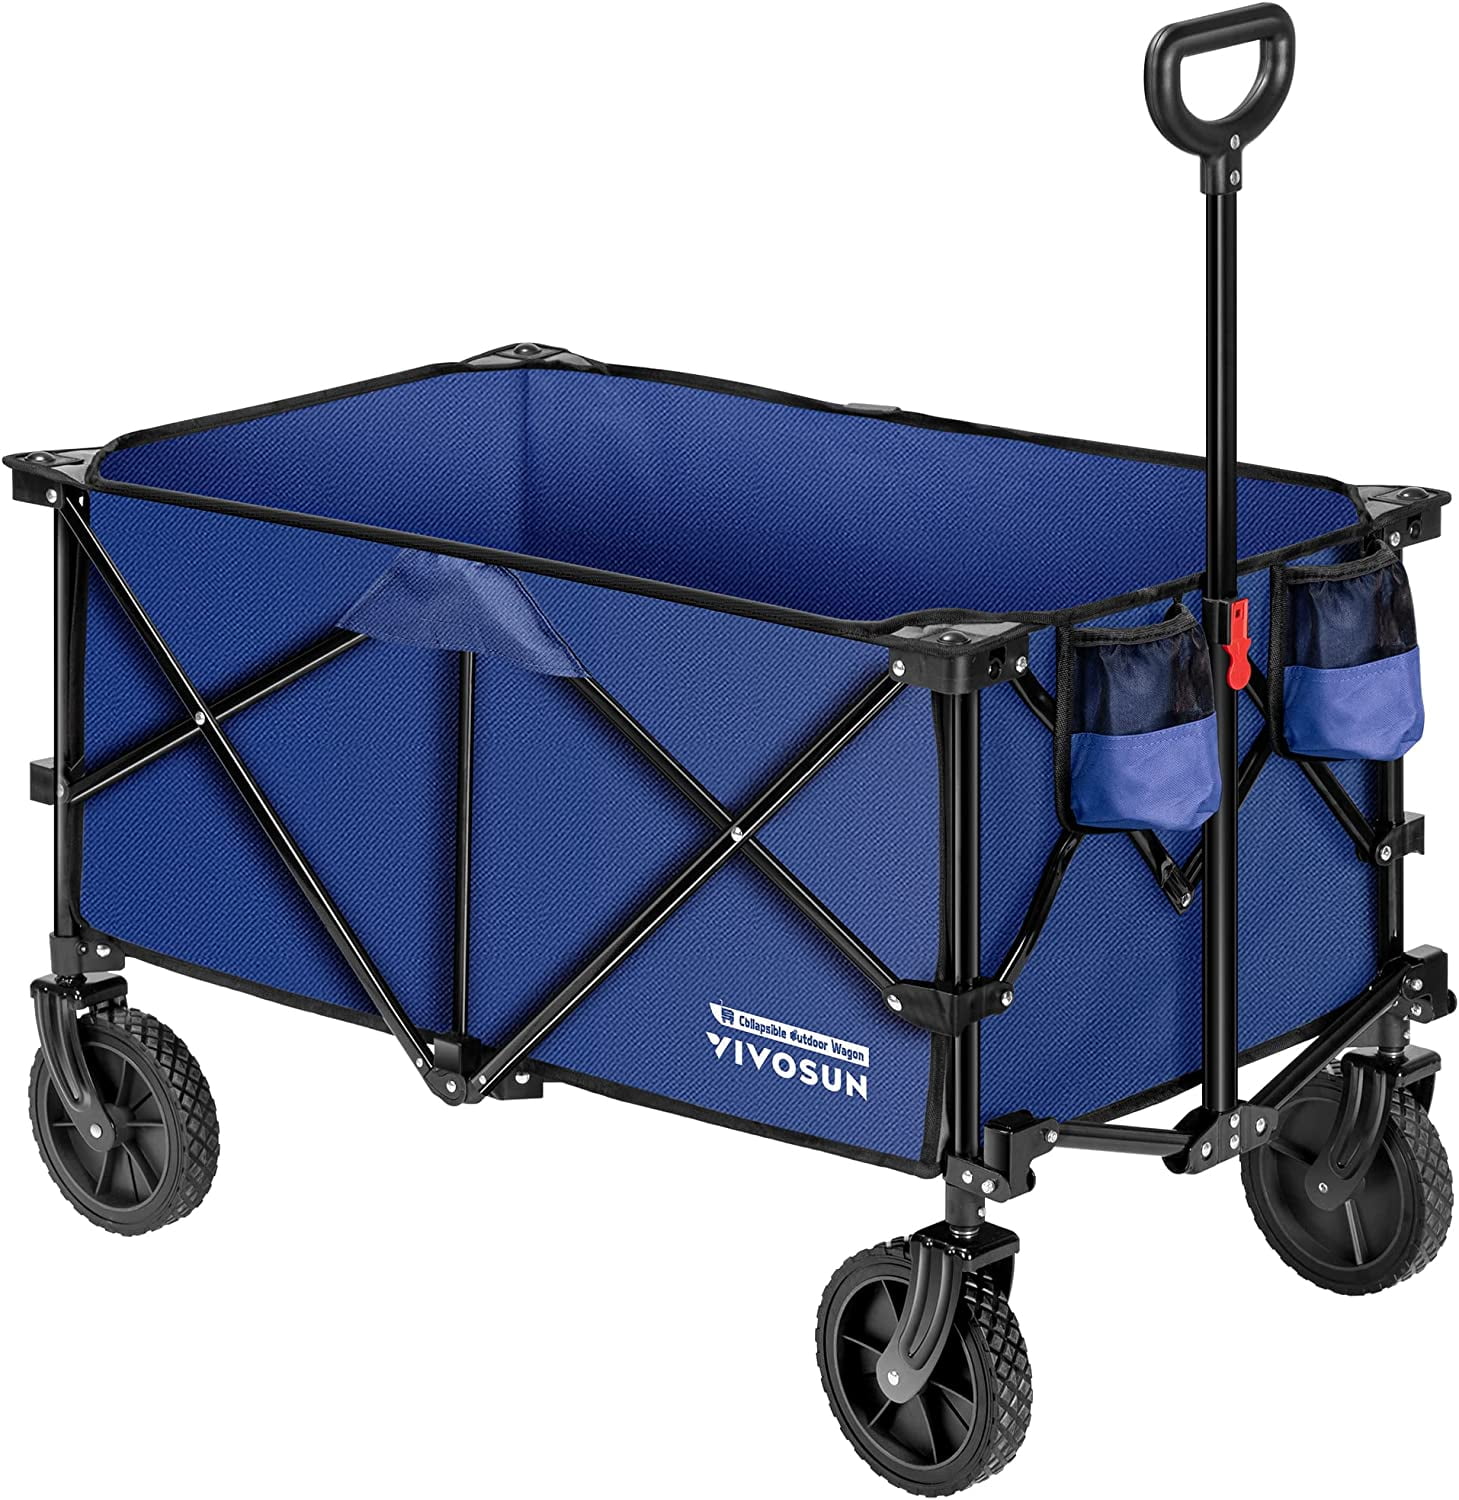 VIVOSUN Collapsible Wagon Cart, Foldable Camping Cart with